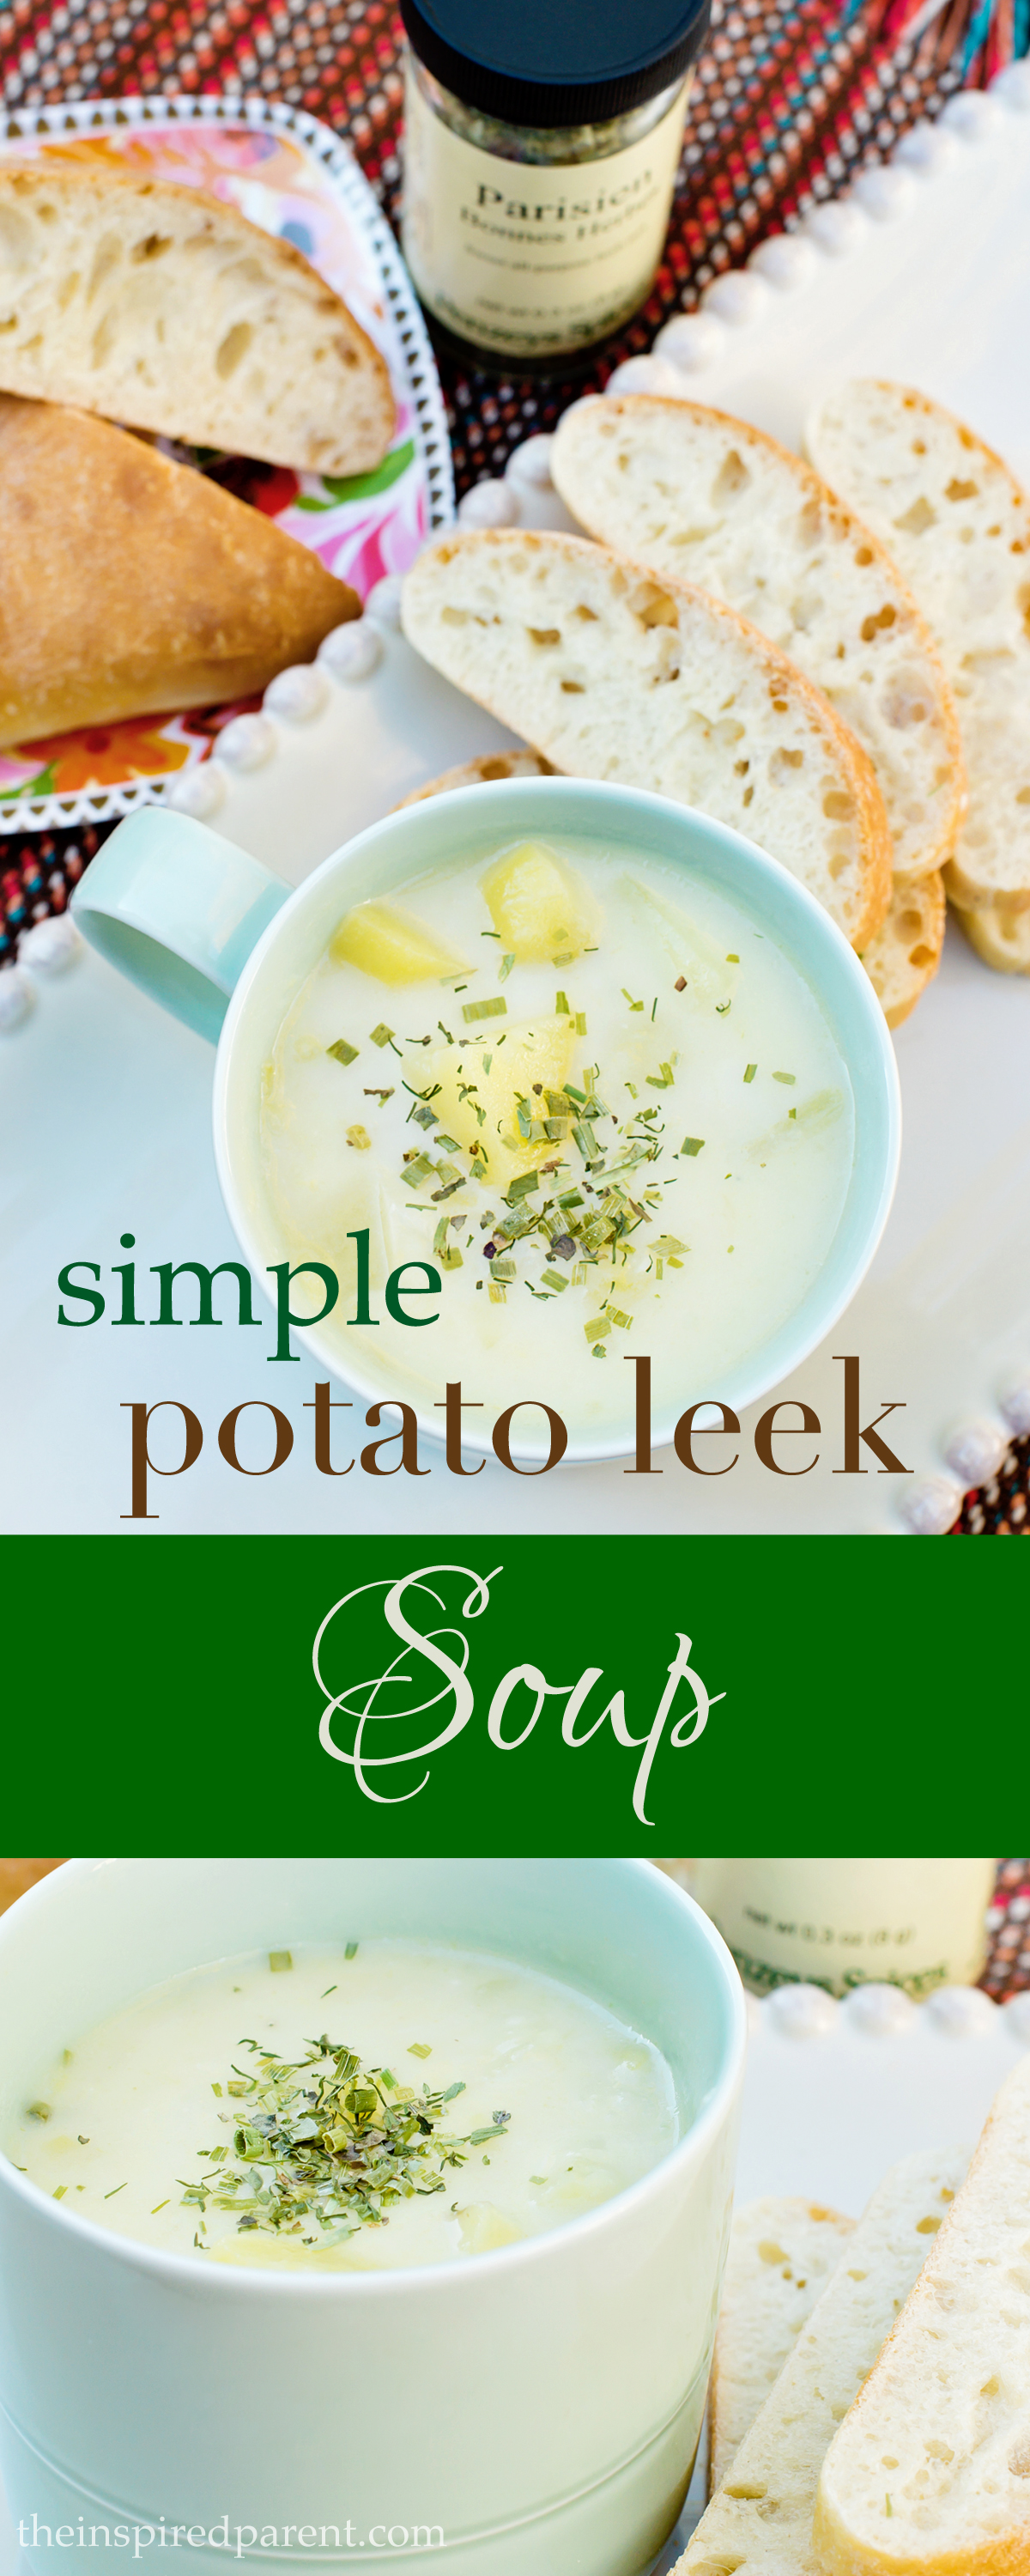 Simple Potato Leek Soup | theinspiredparent.com